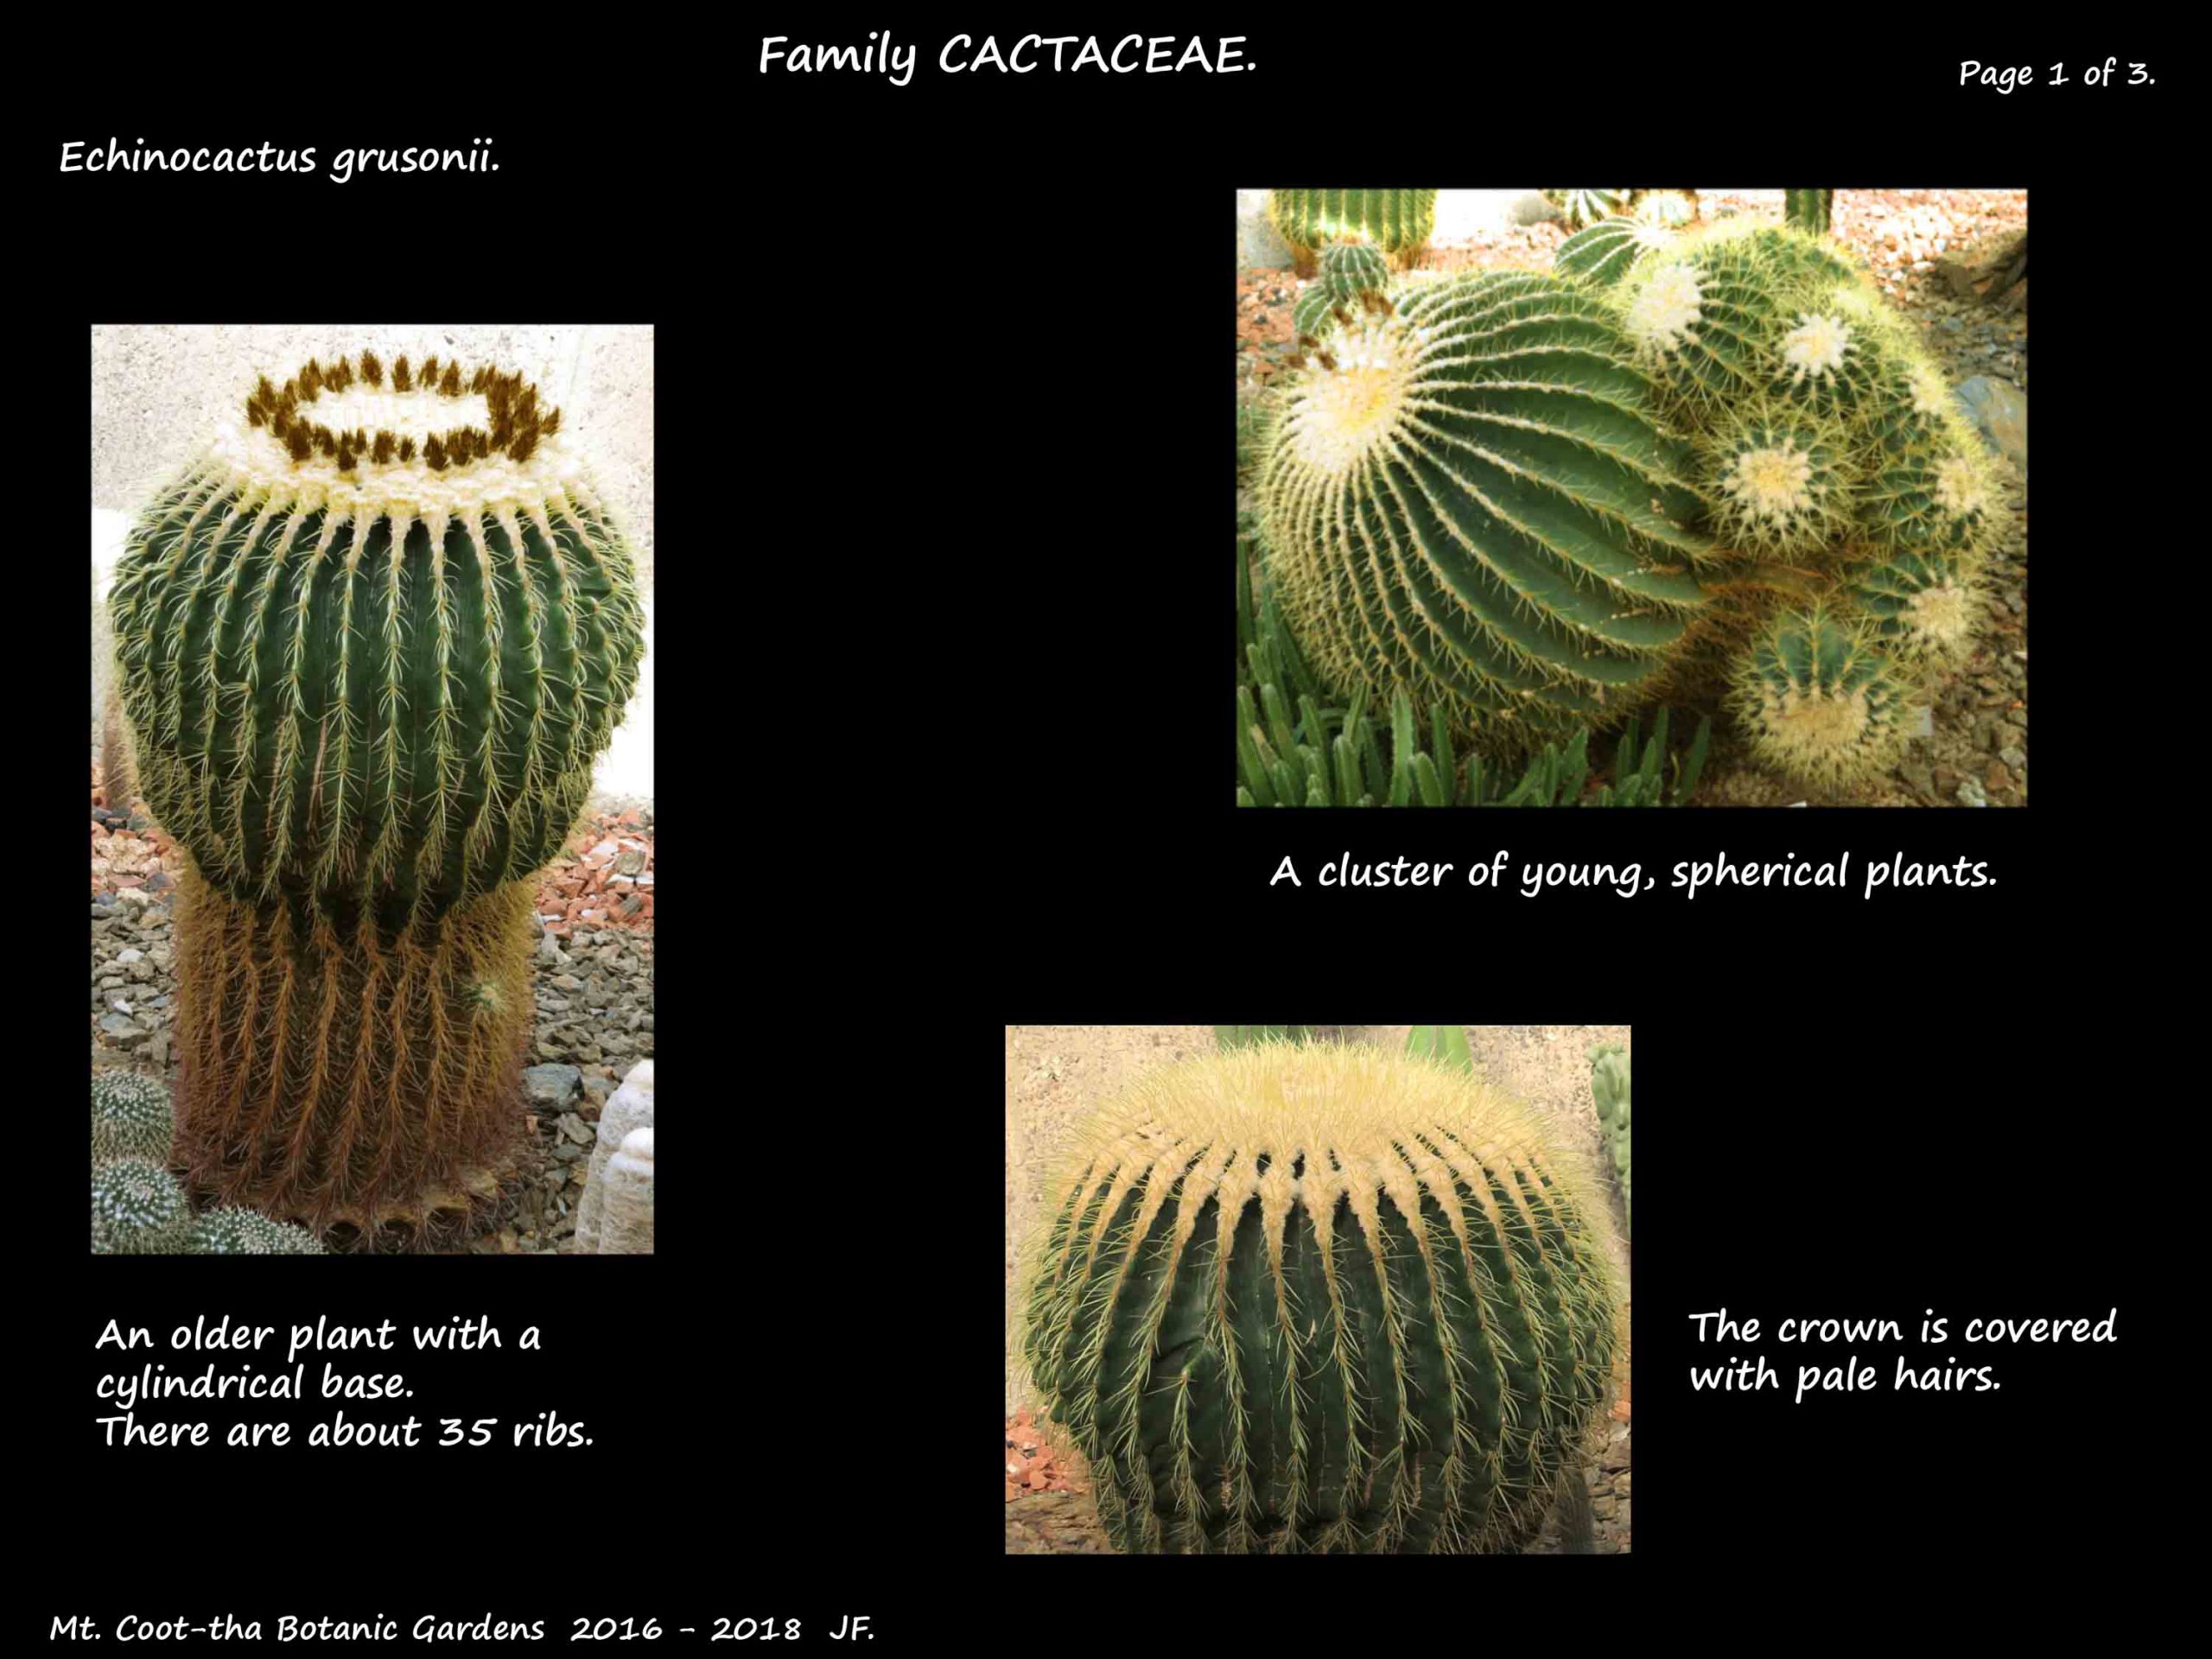 1 Golden Barrel cactus